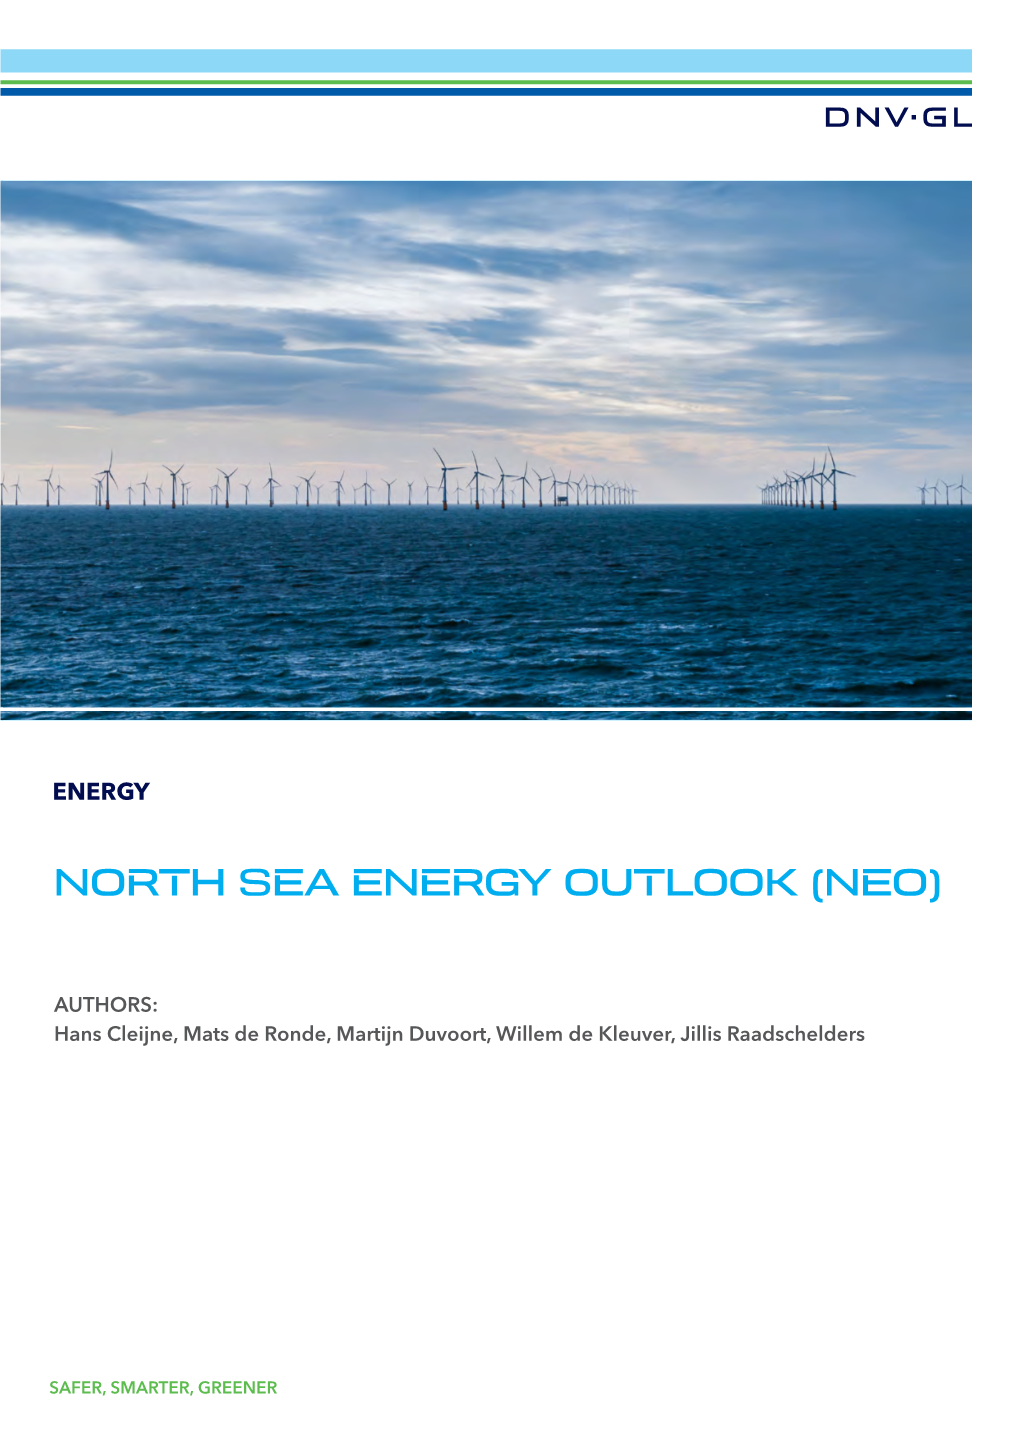 North Sea Energy Outlook (Neo)